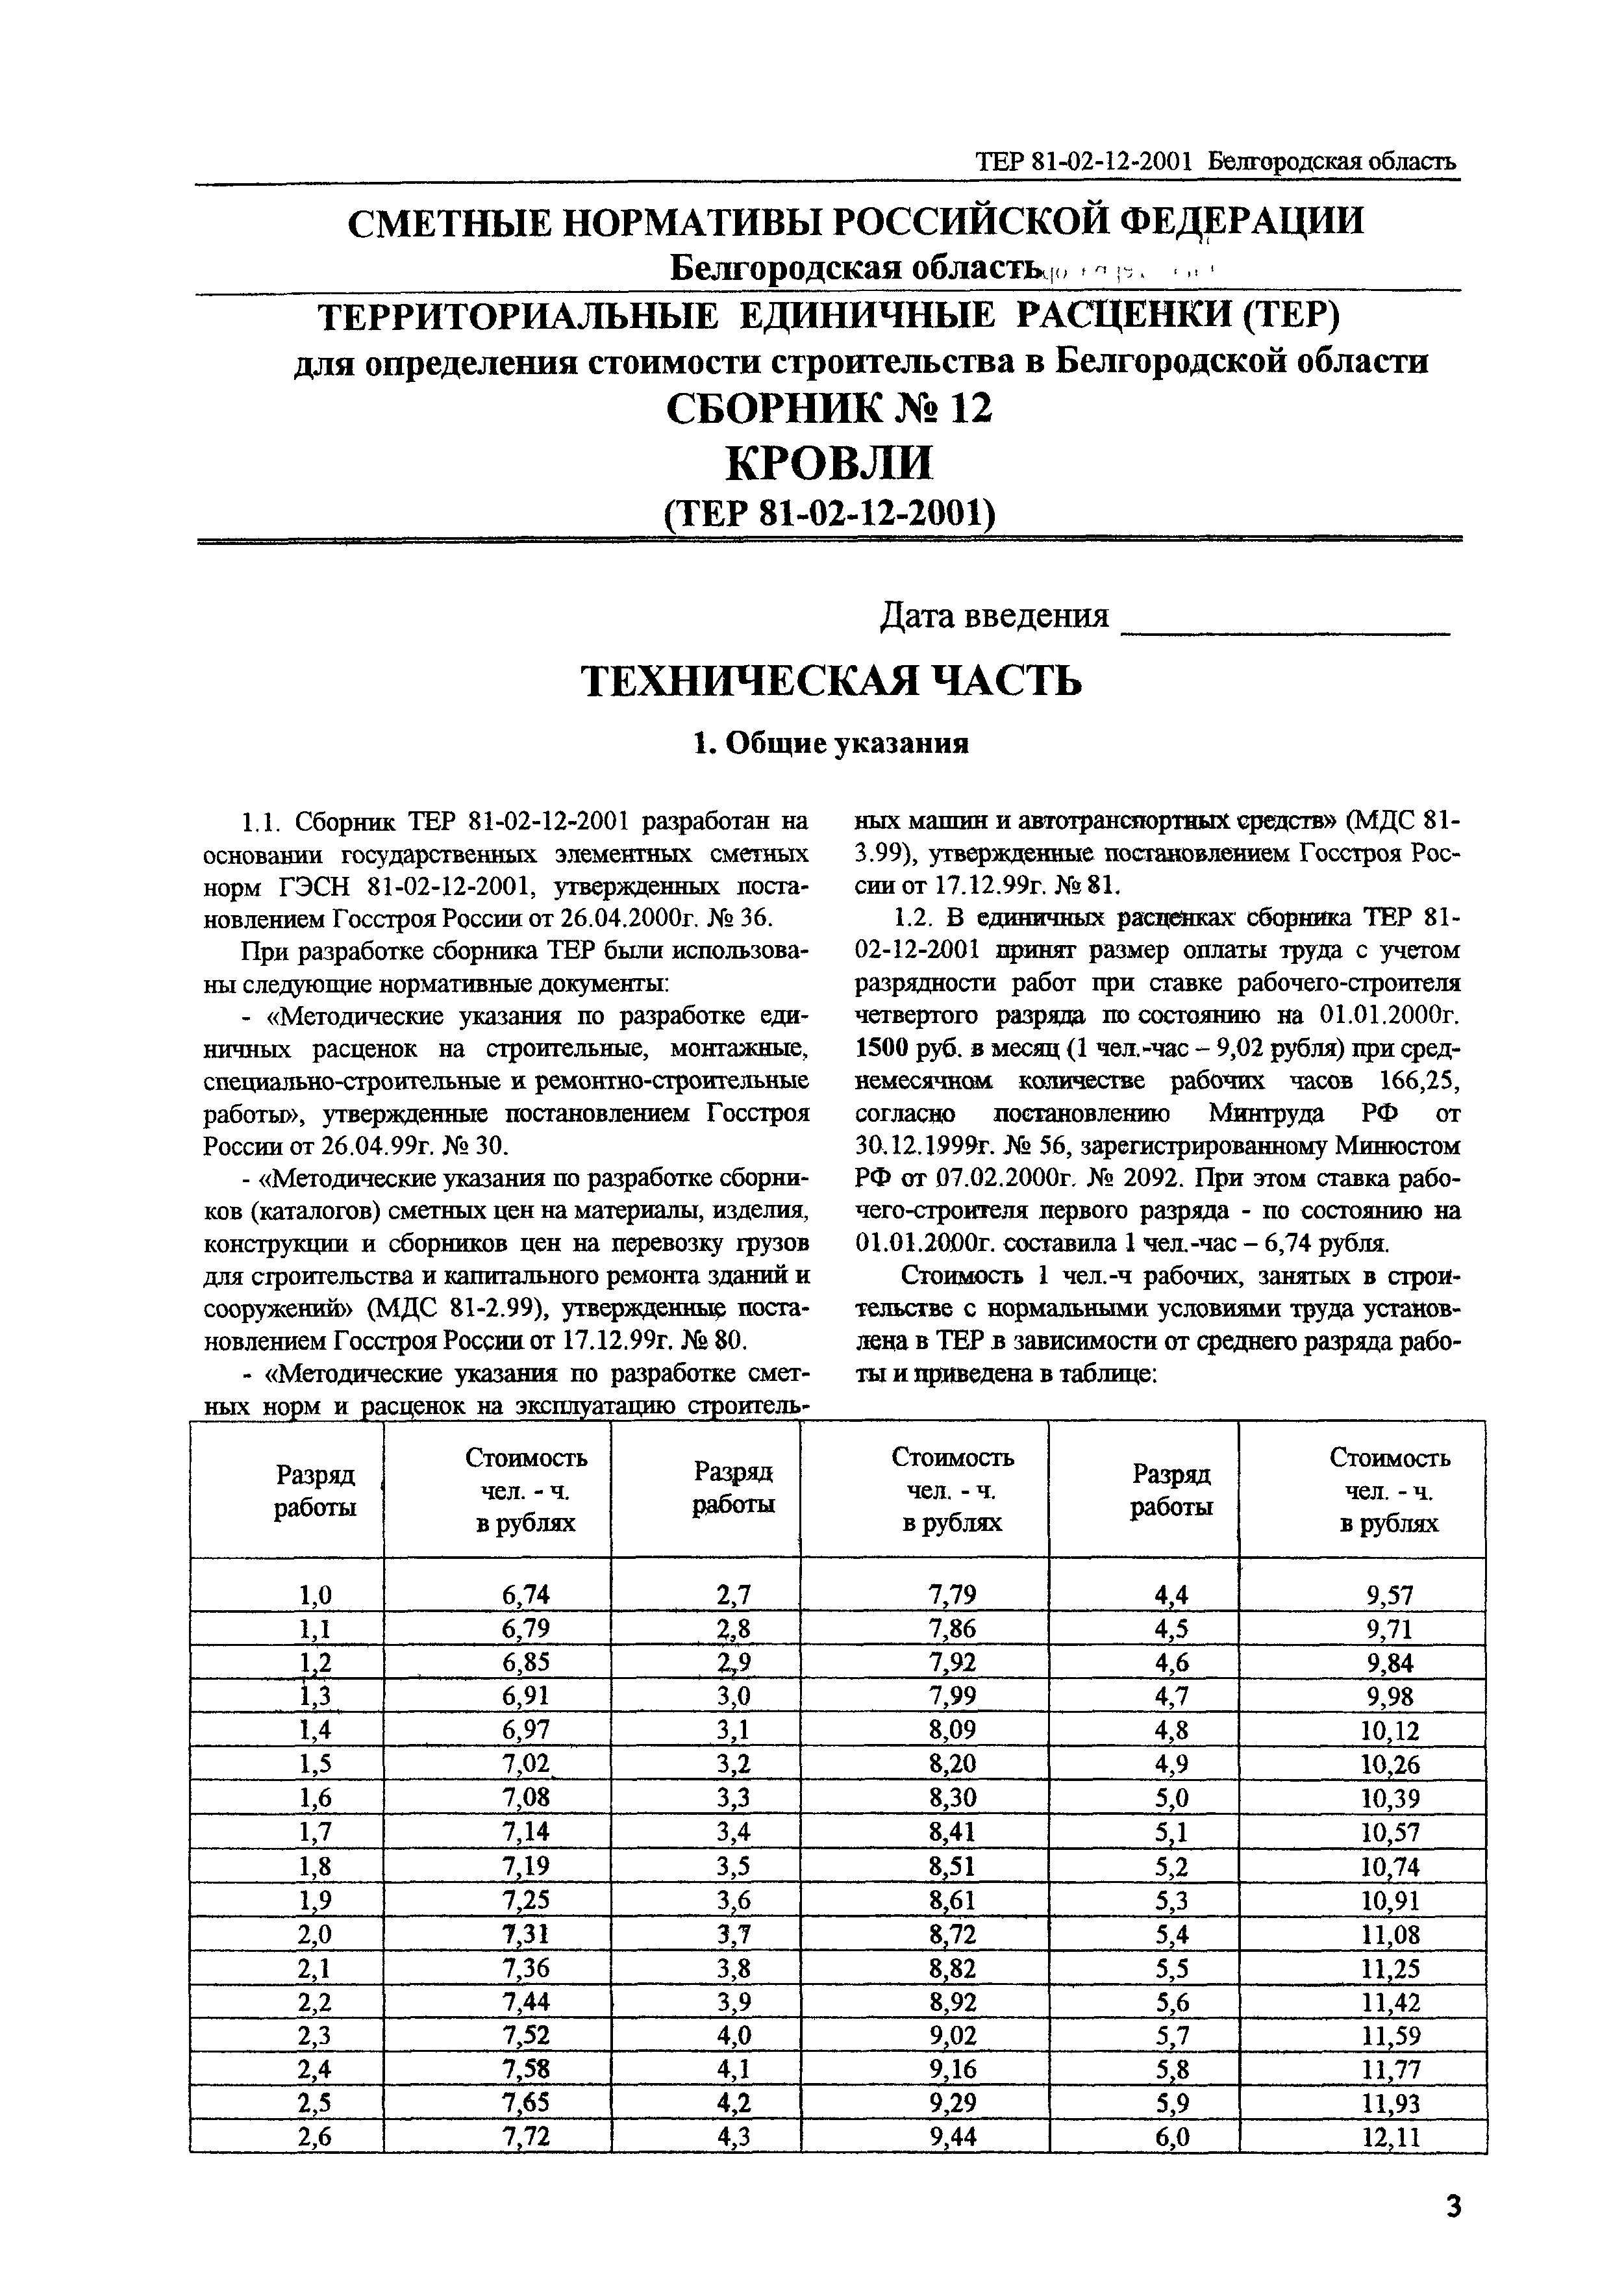 ТЕР 2001-12 Белгородской области